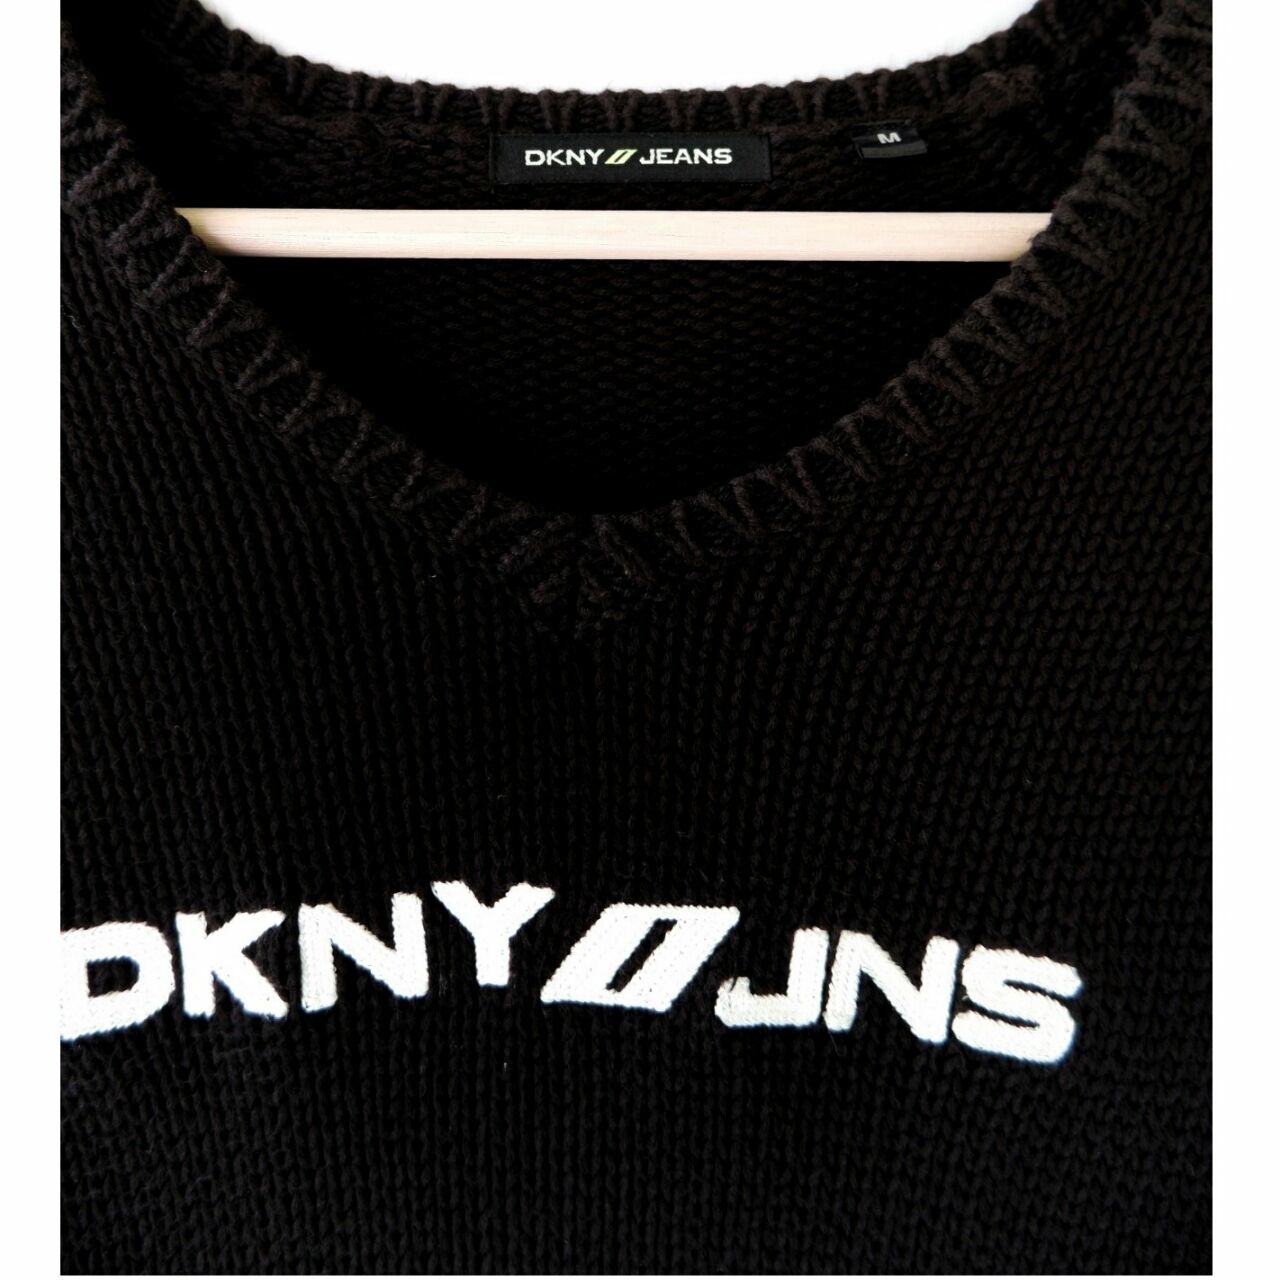 DKNY Jeans Black Sweater